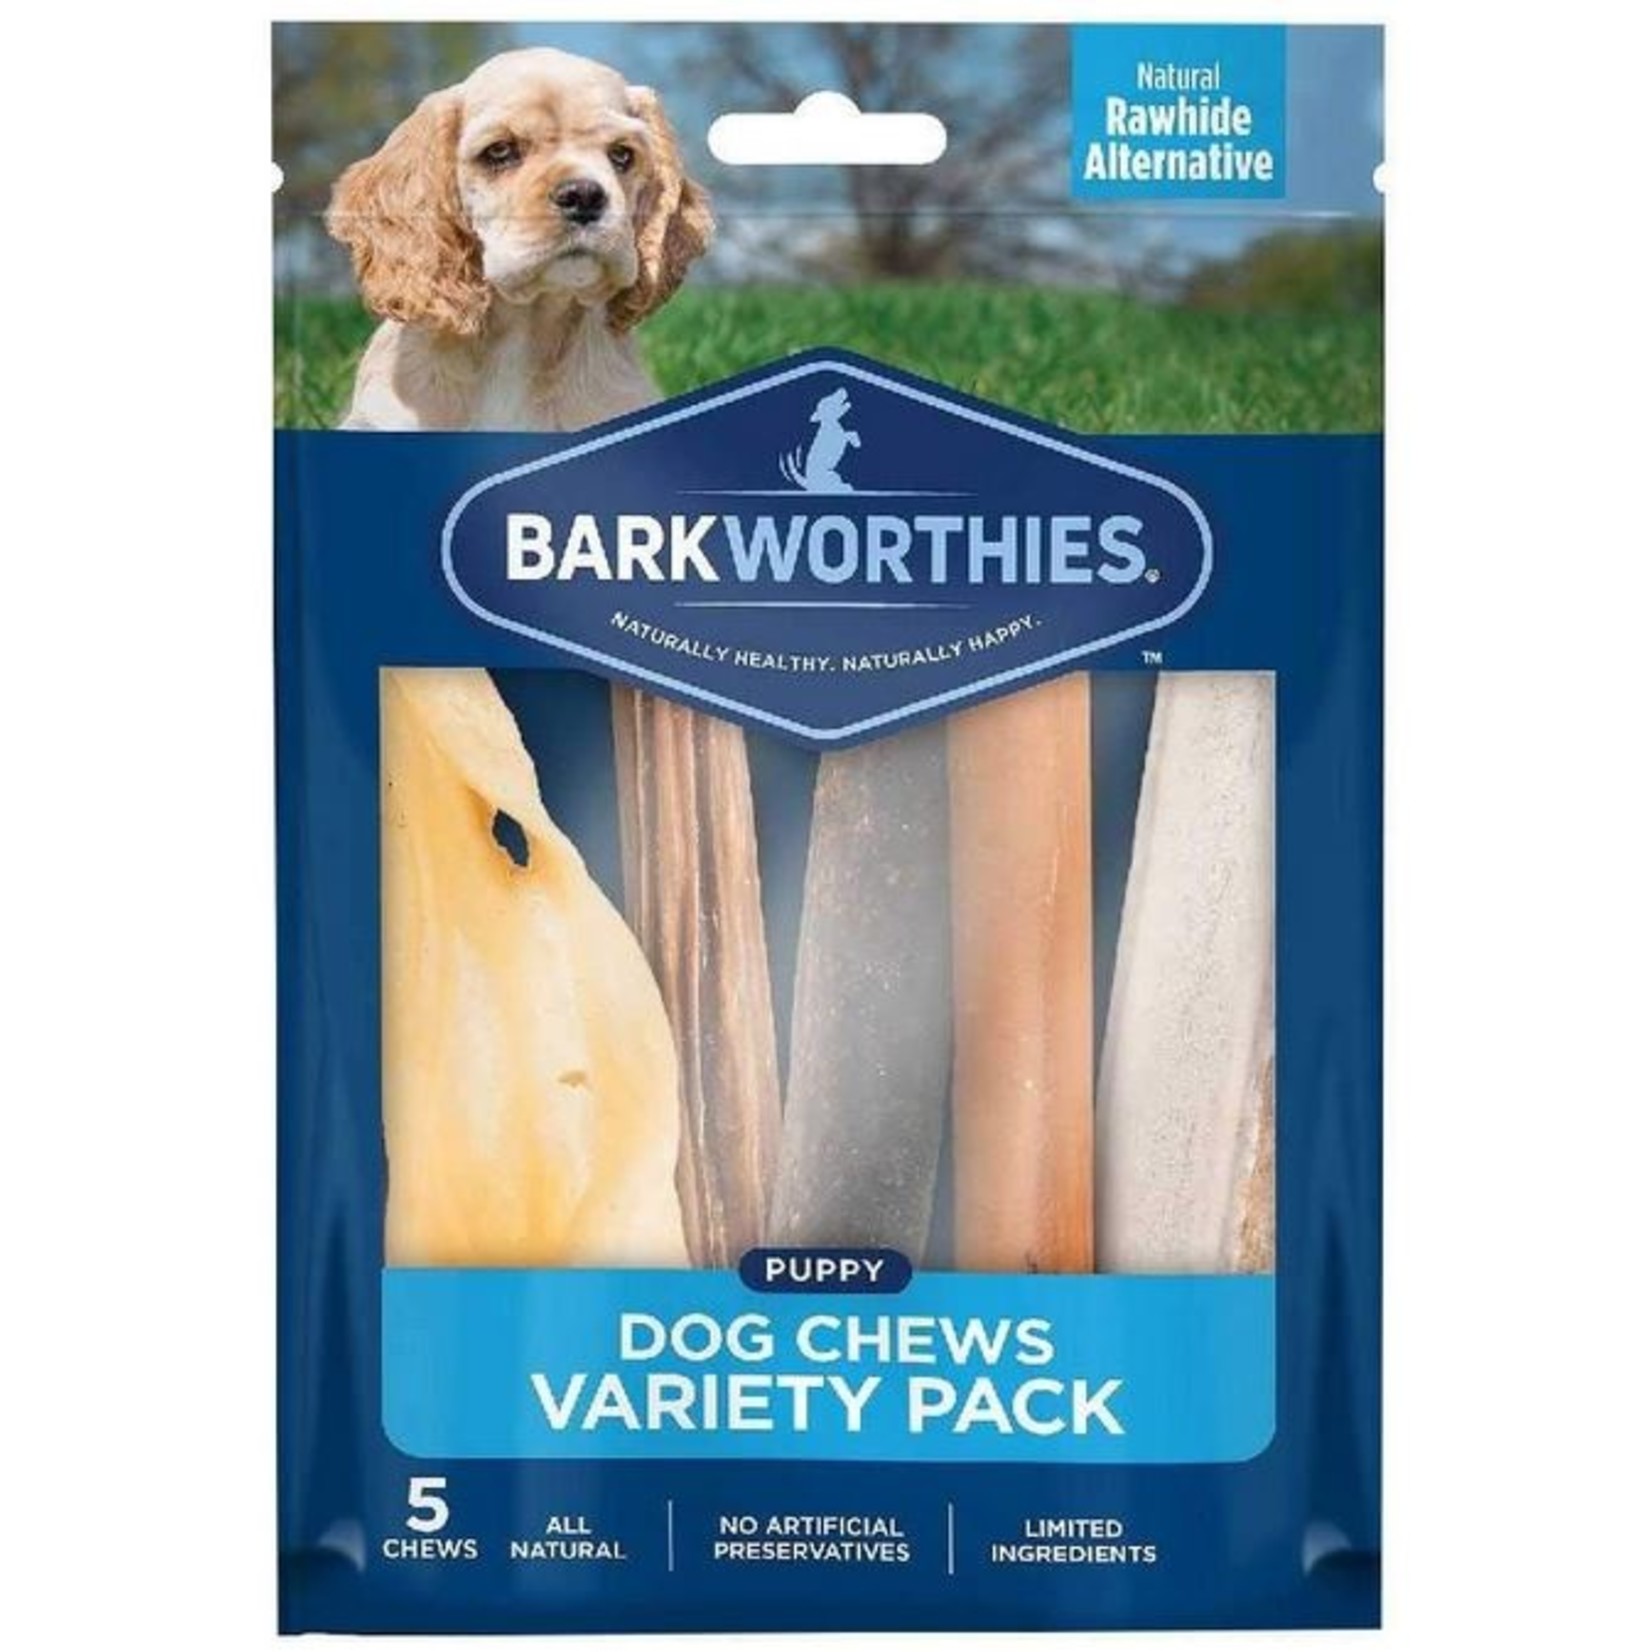 Barkworthies BARKWORTHIES Variety Pack Puppy Single Bag